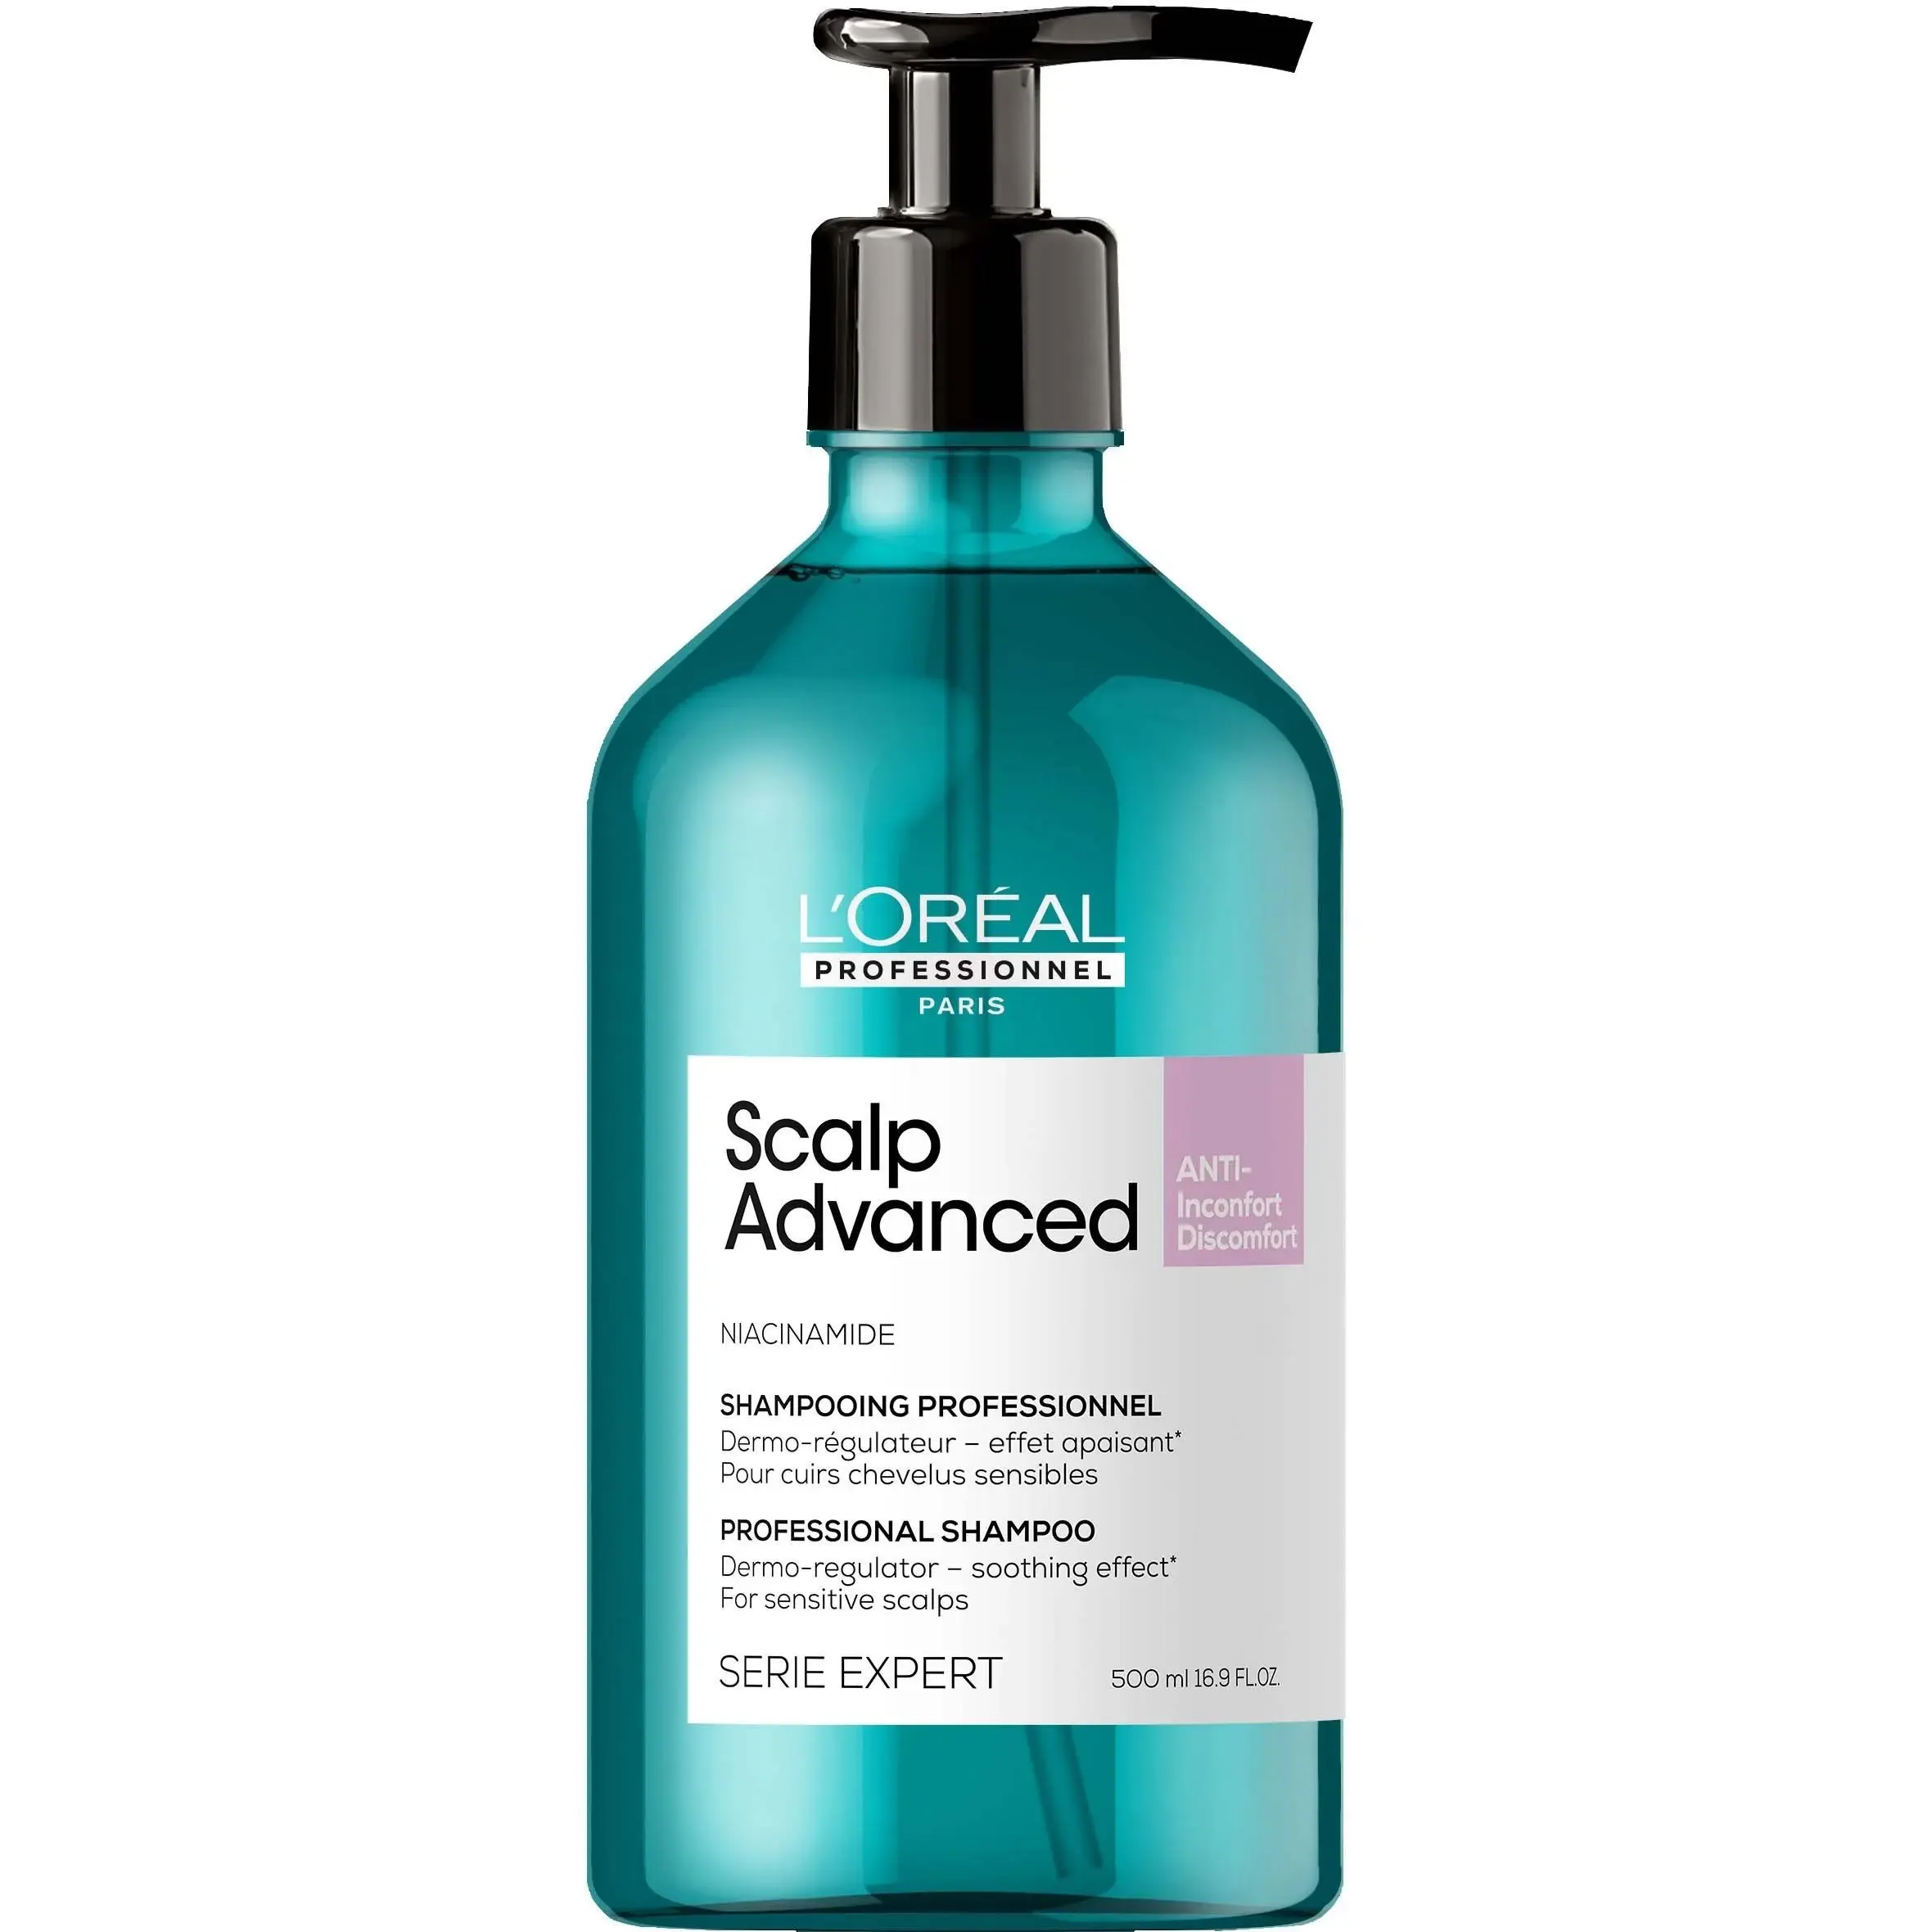 L'Oréal Professionnel Scalp Advanced Anti-Discomfort Shampoo 500 ml